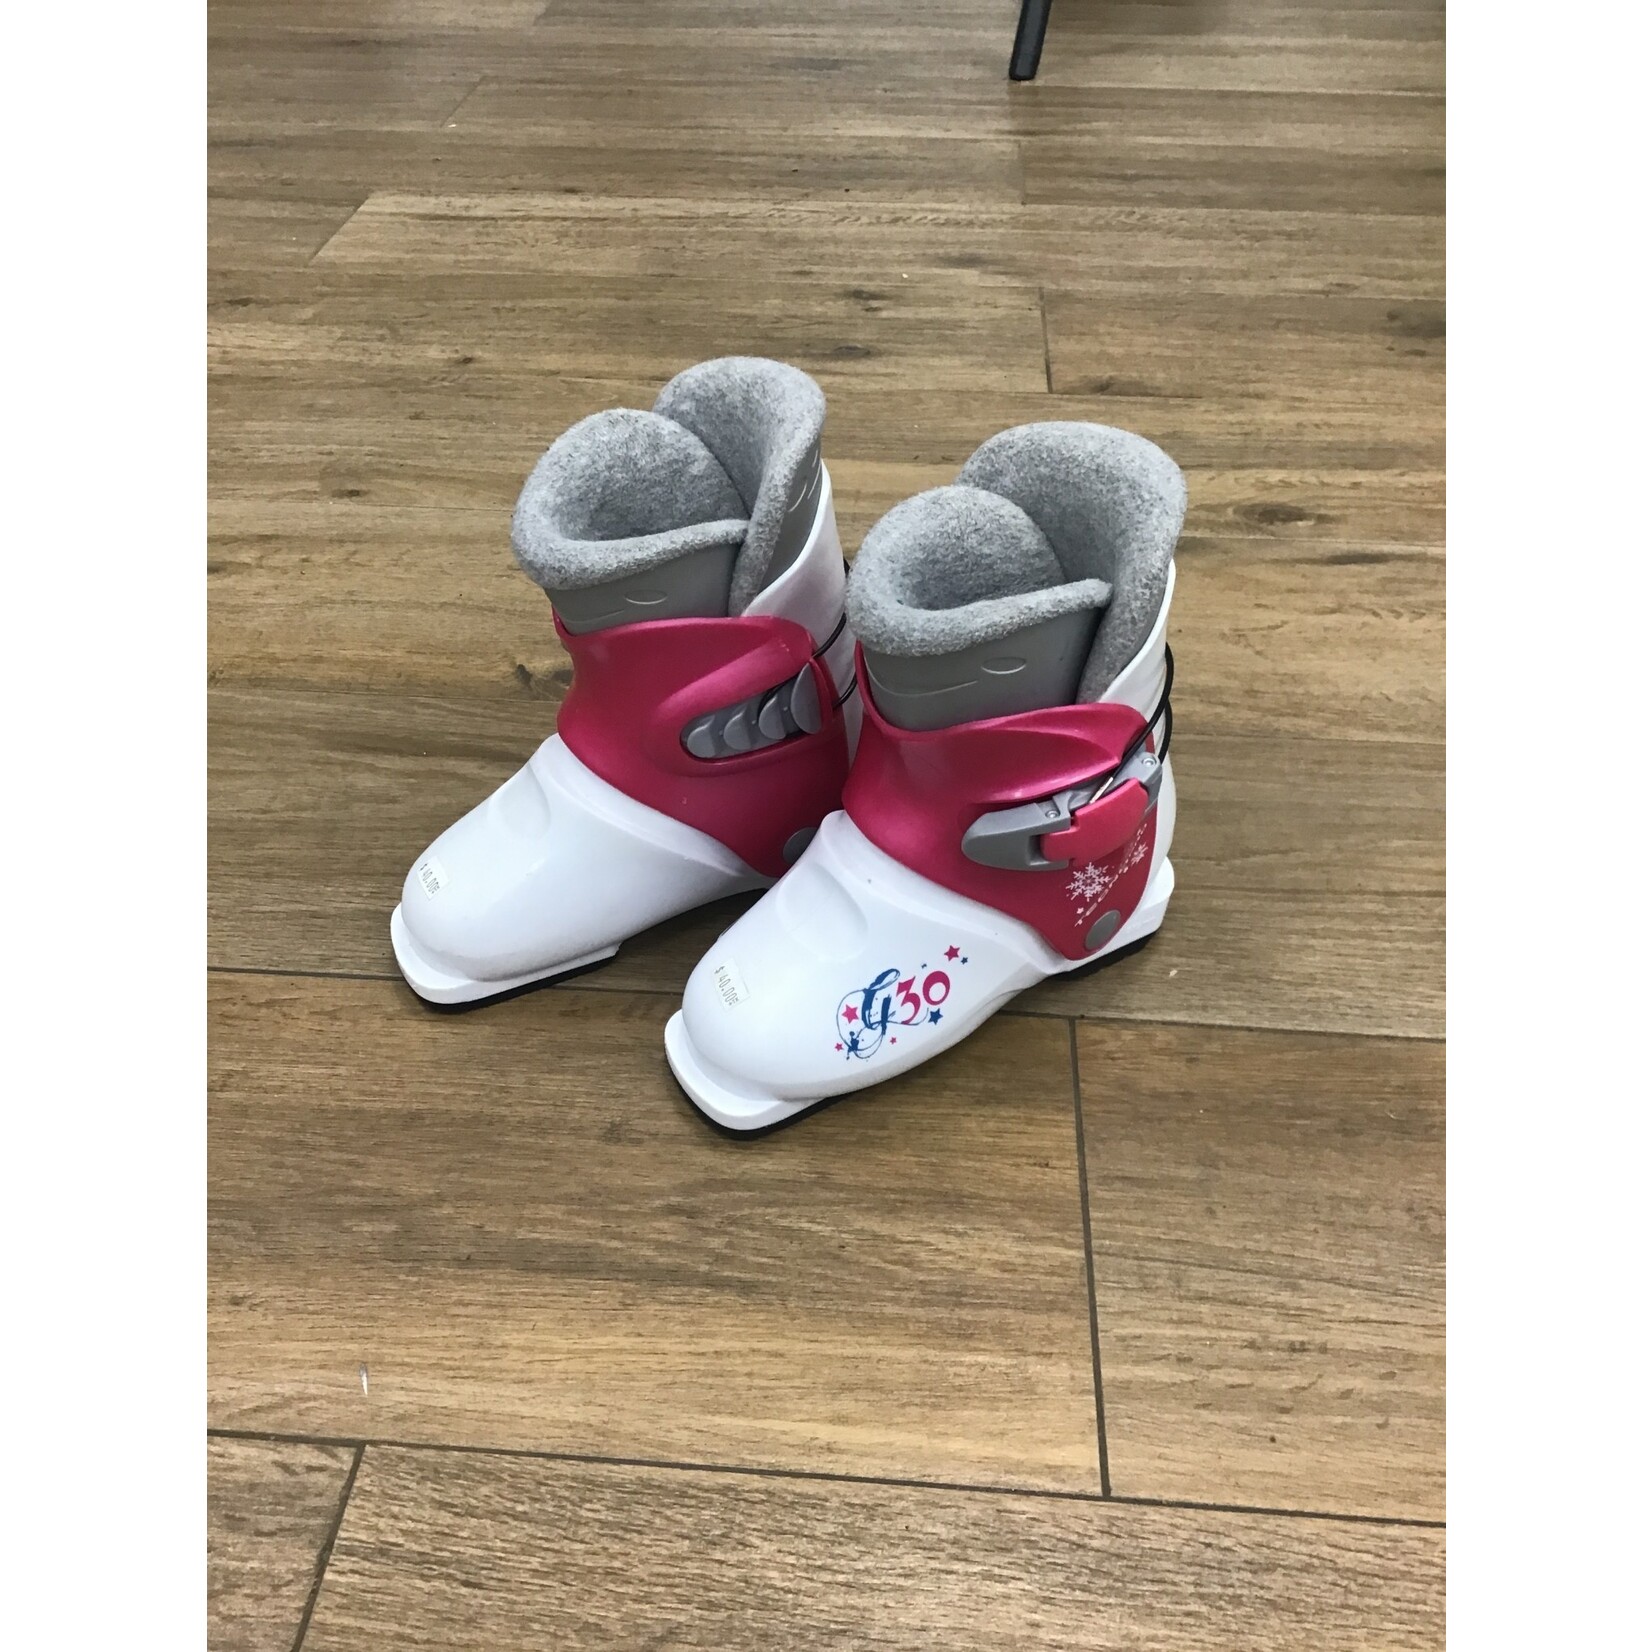 Used ski boot tecno pro 19.5 white/pink